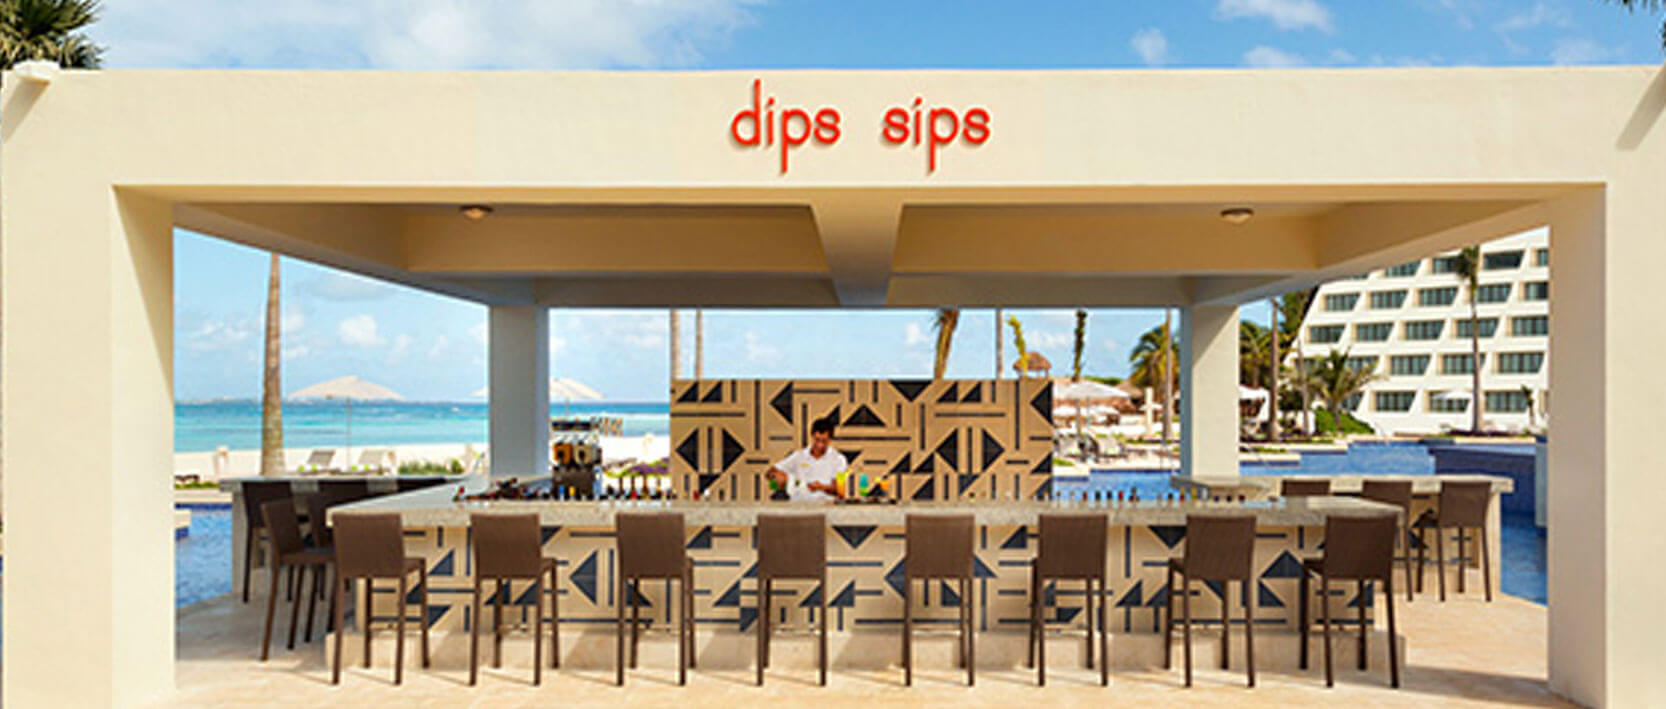 Hyatt Ziva Cancun Restaurants and Bars - Dips & Sips